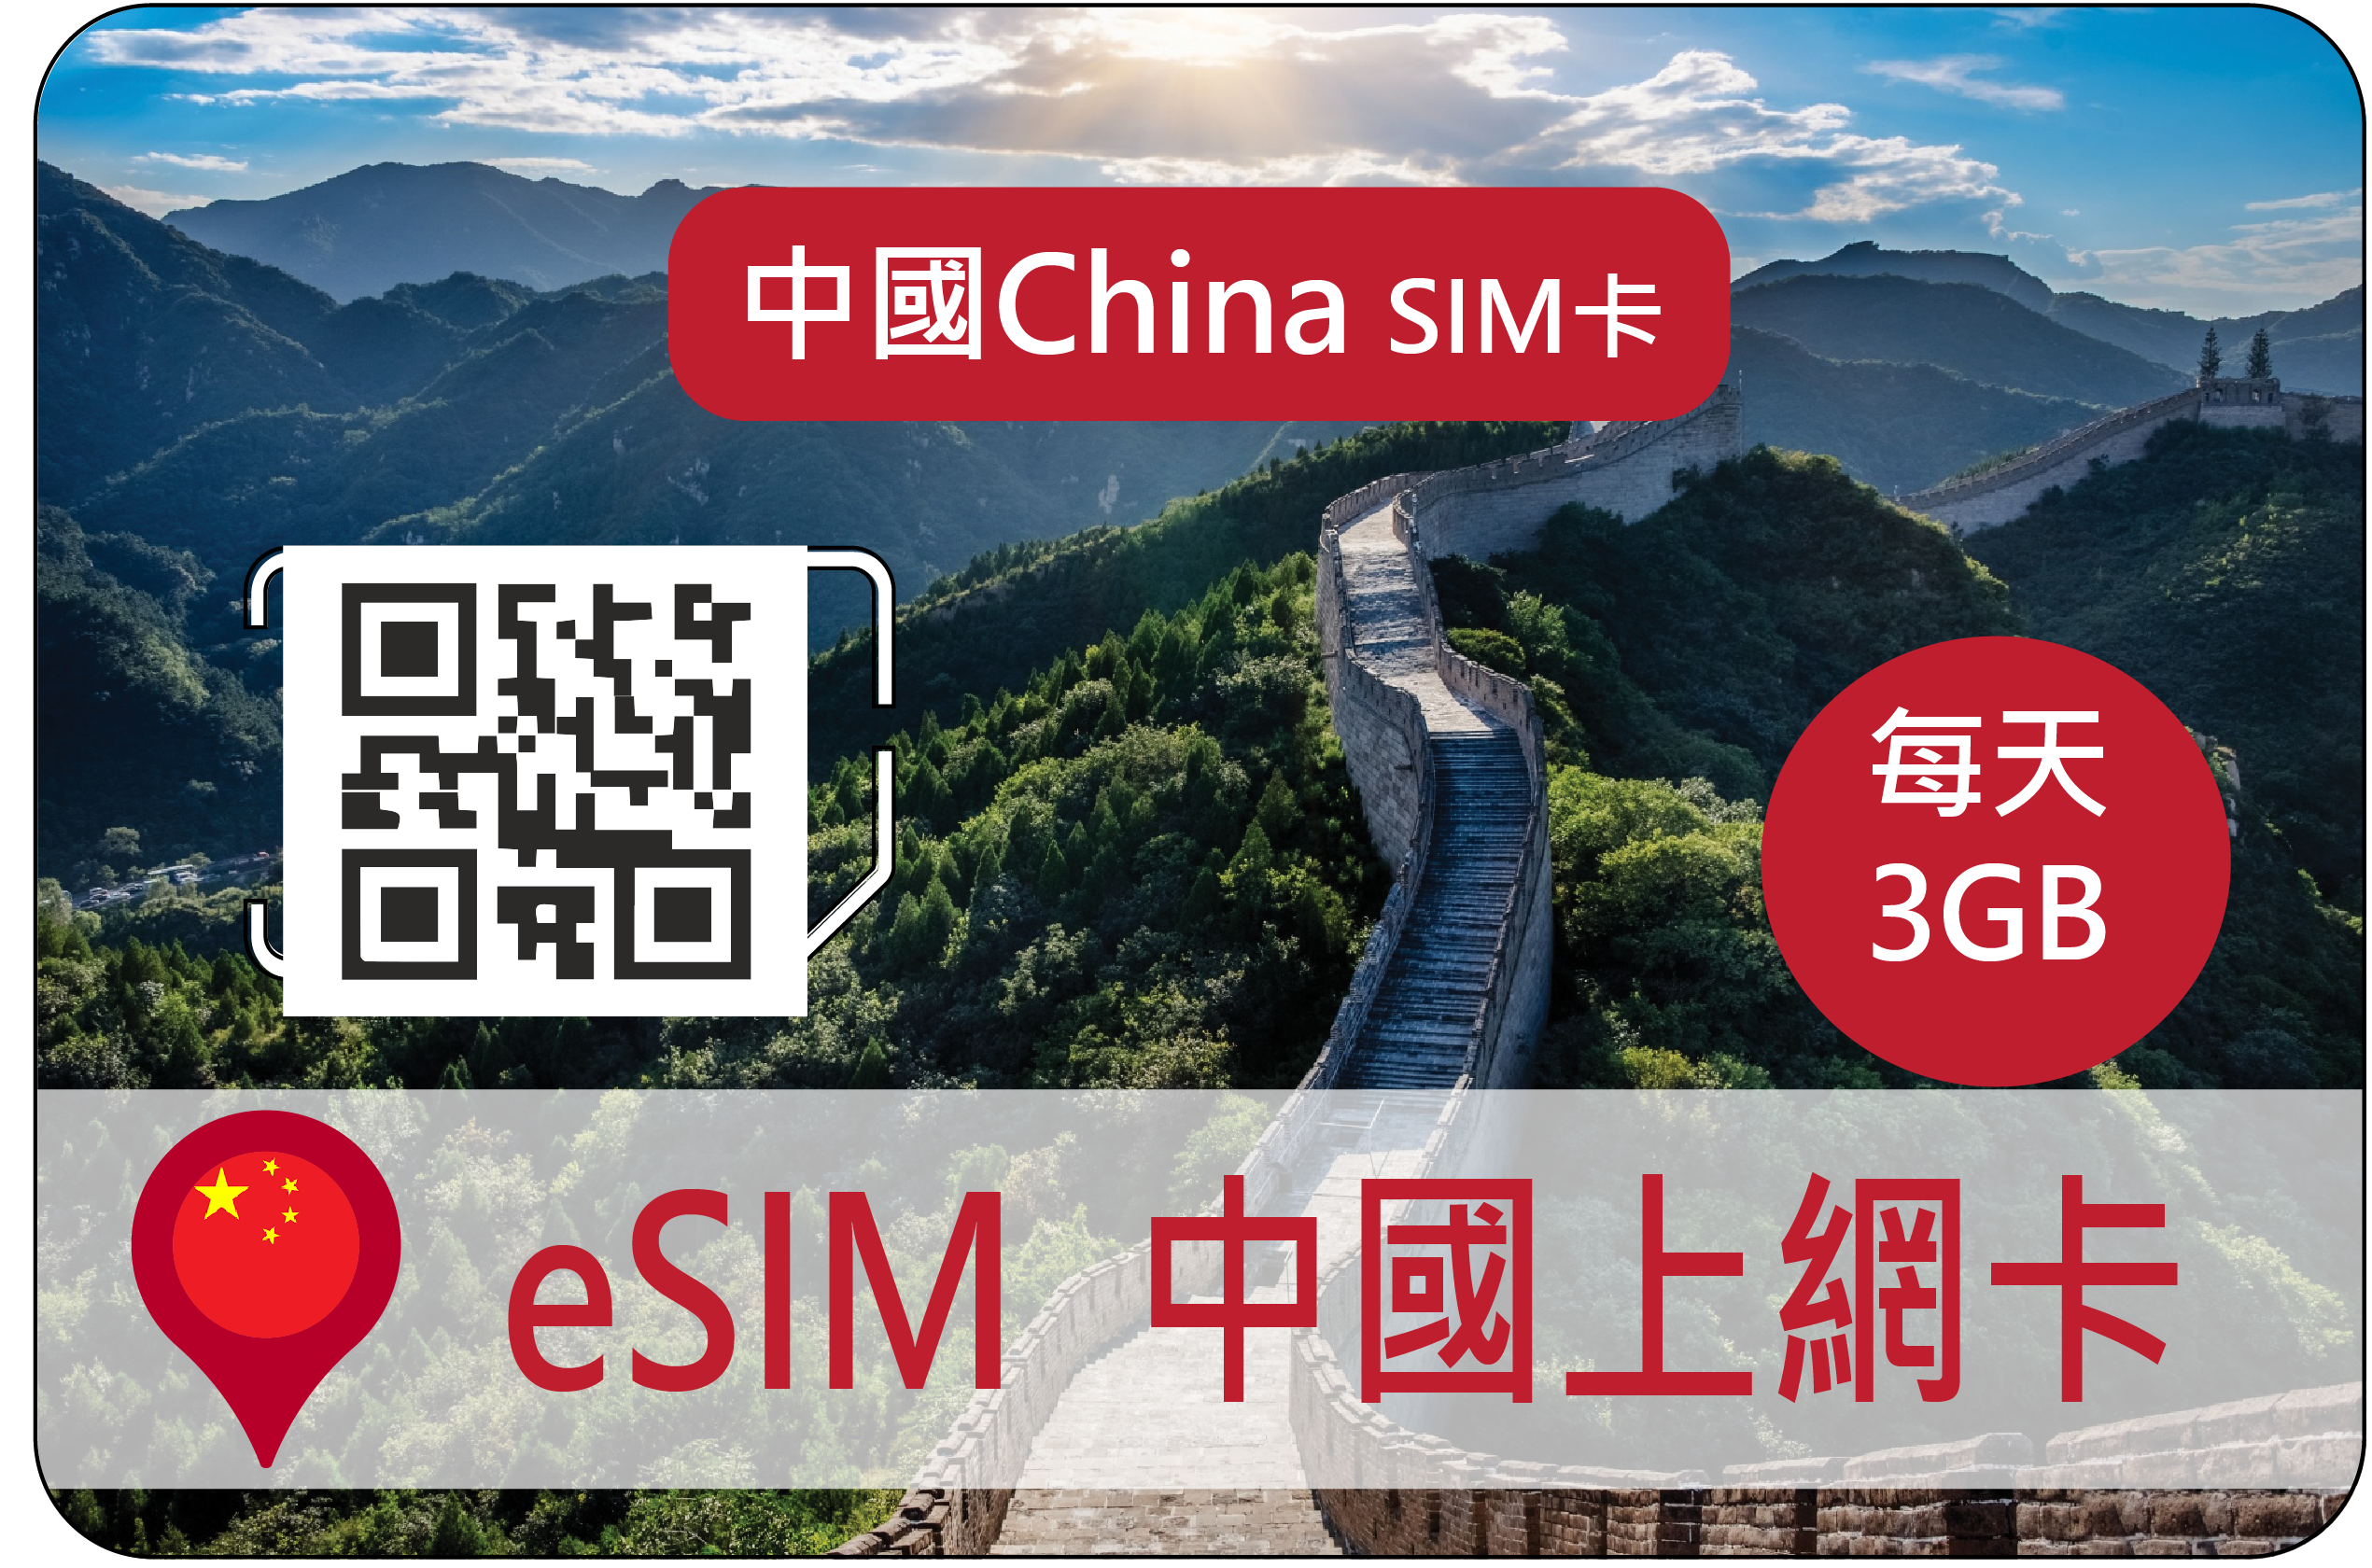 eSIM China (China Mobile) 3GB hotspot sharing per day